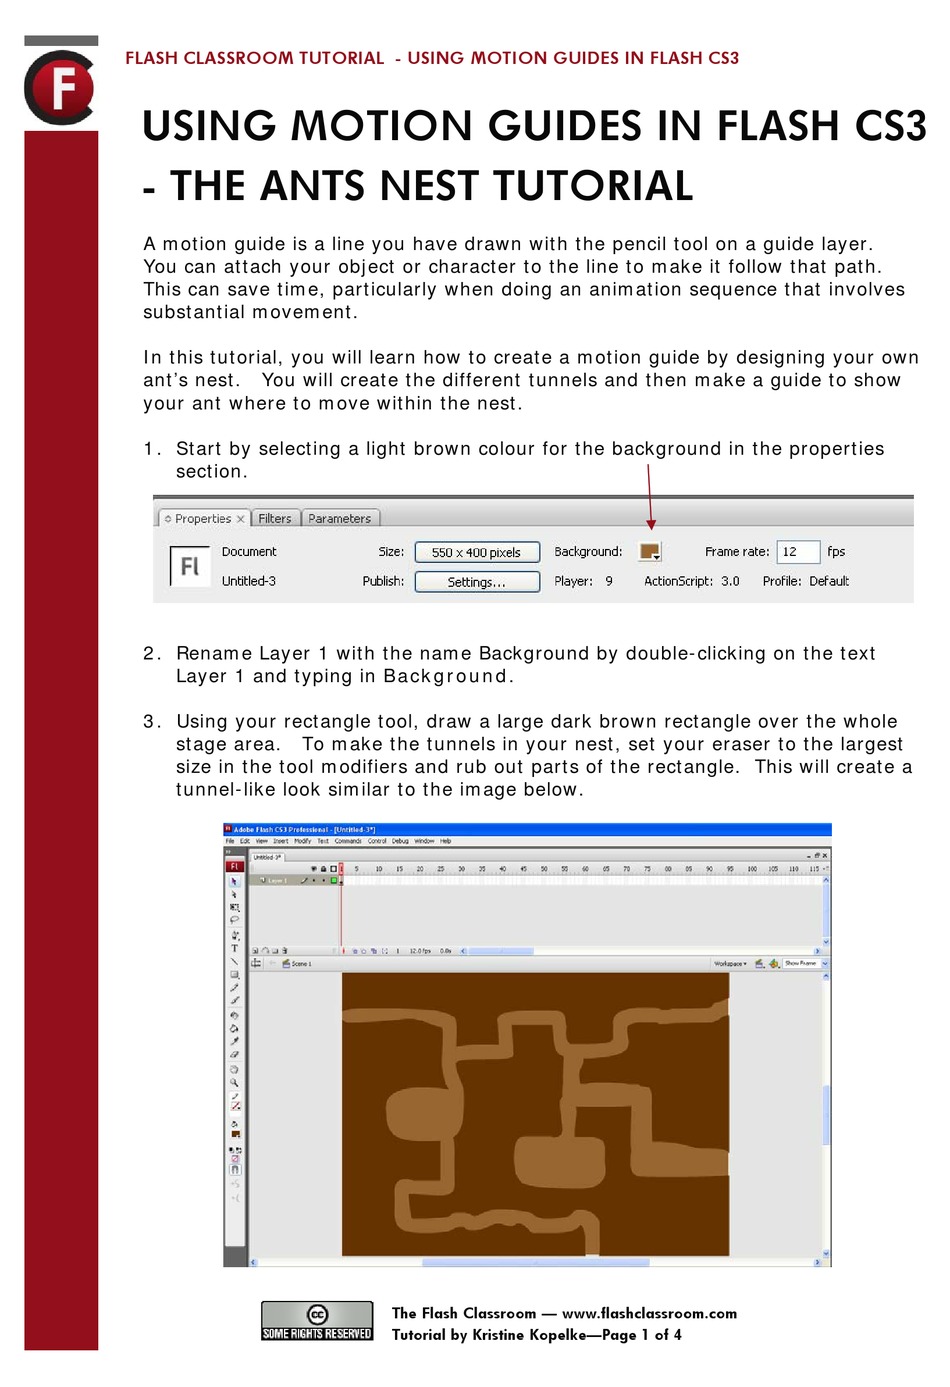 Adobe flash cs3 tutorials for beginners pdf download lotto dominator software free download